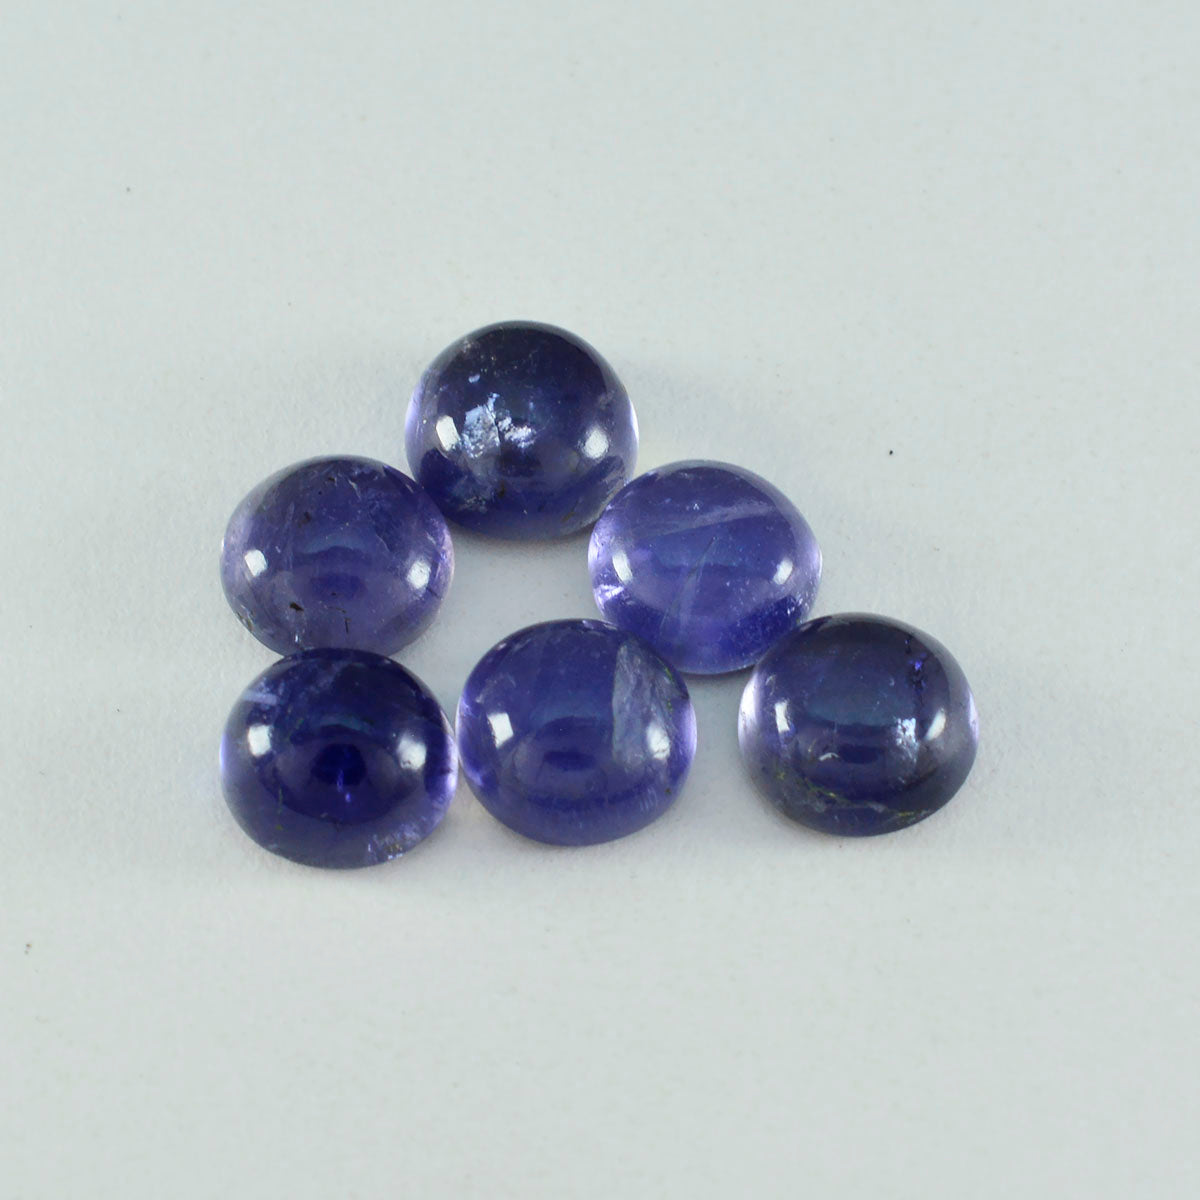 Riyogems 1PC Blue Iolite Cabochon 14x14 mm Round Shape pretty Quality Gemstone